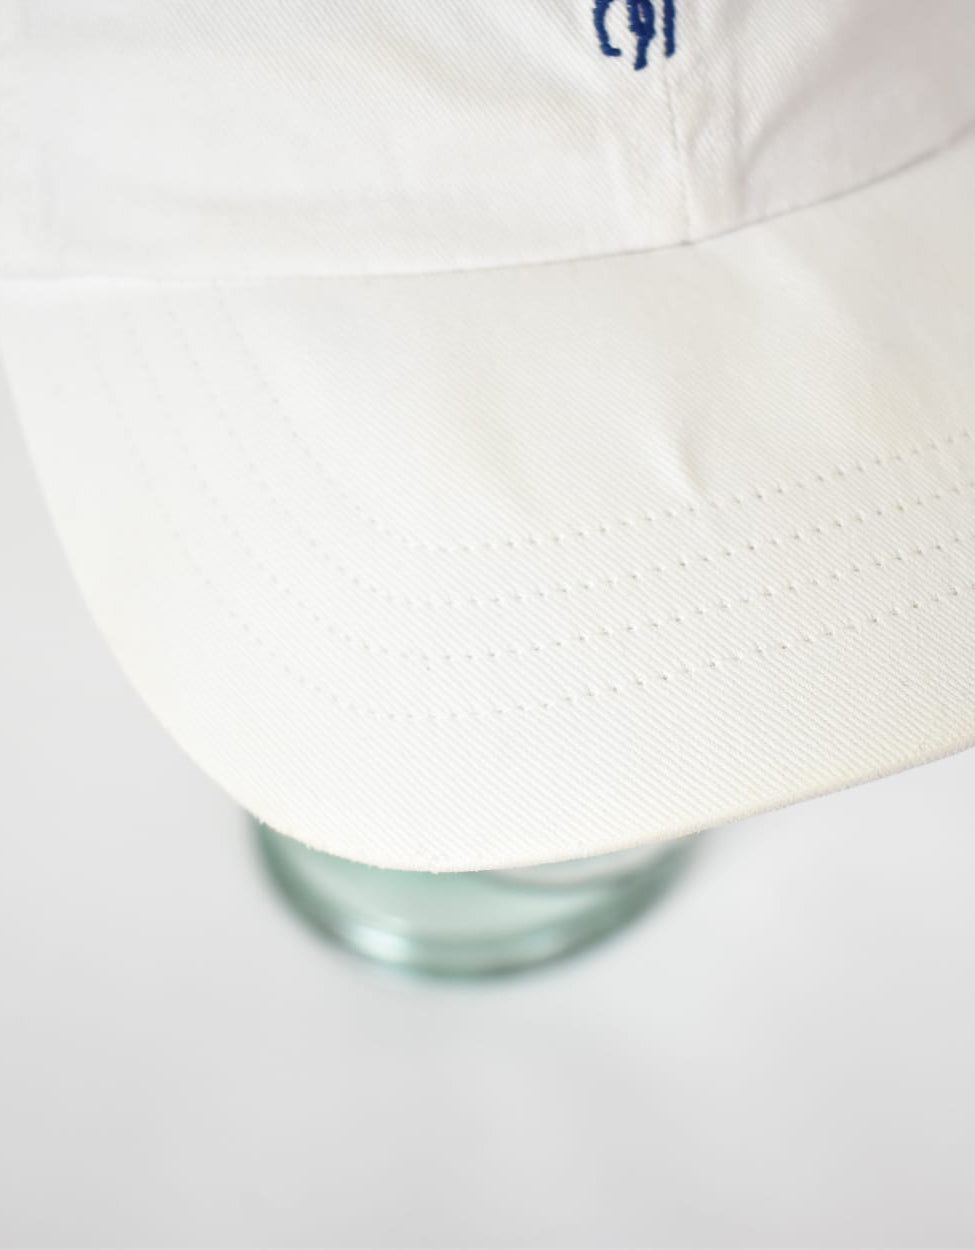 White Polo Ralph Lauren Cap